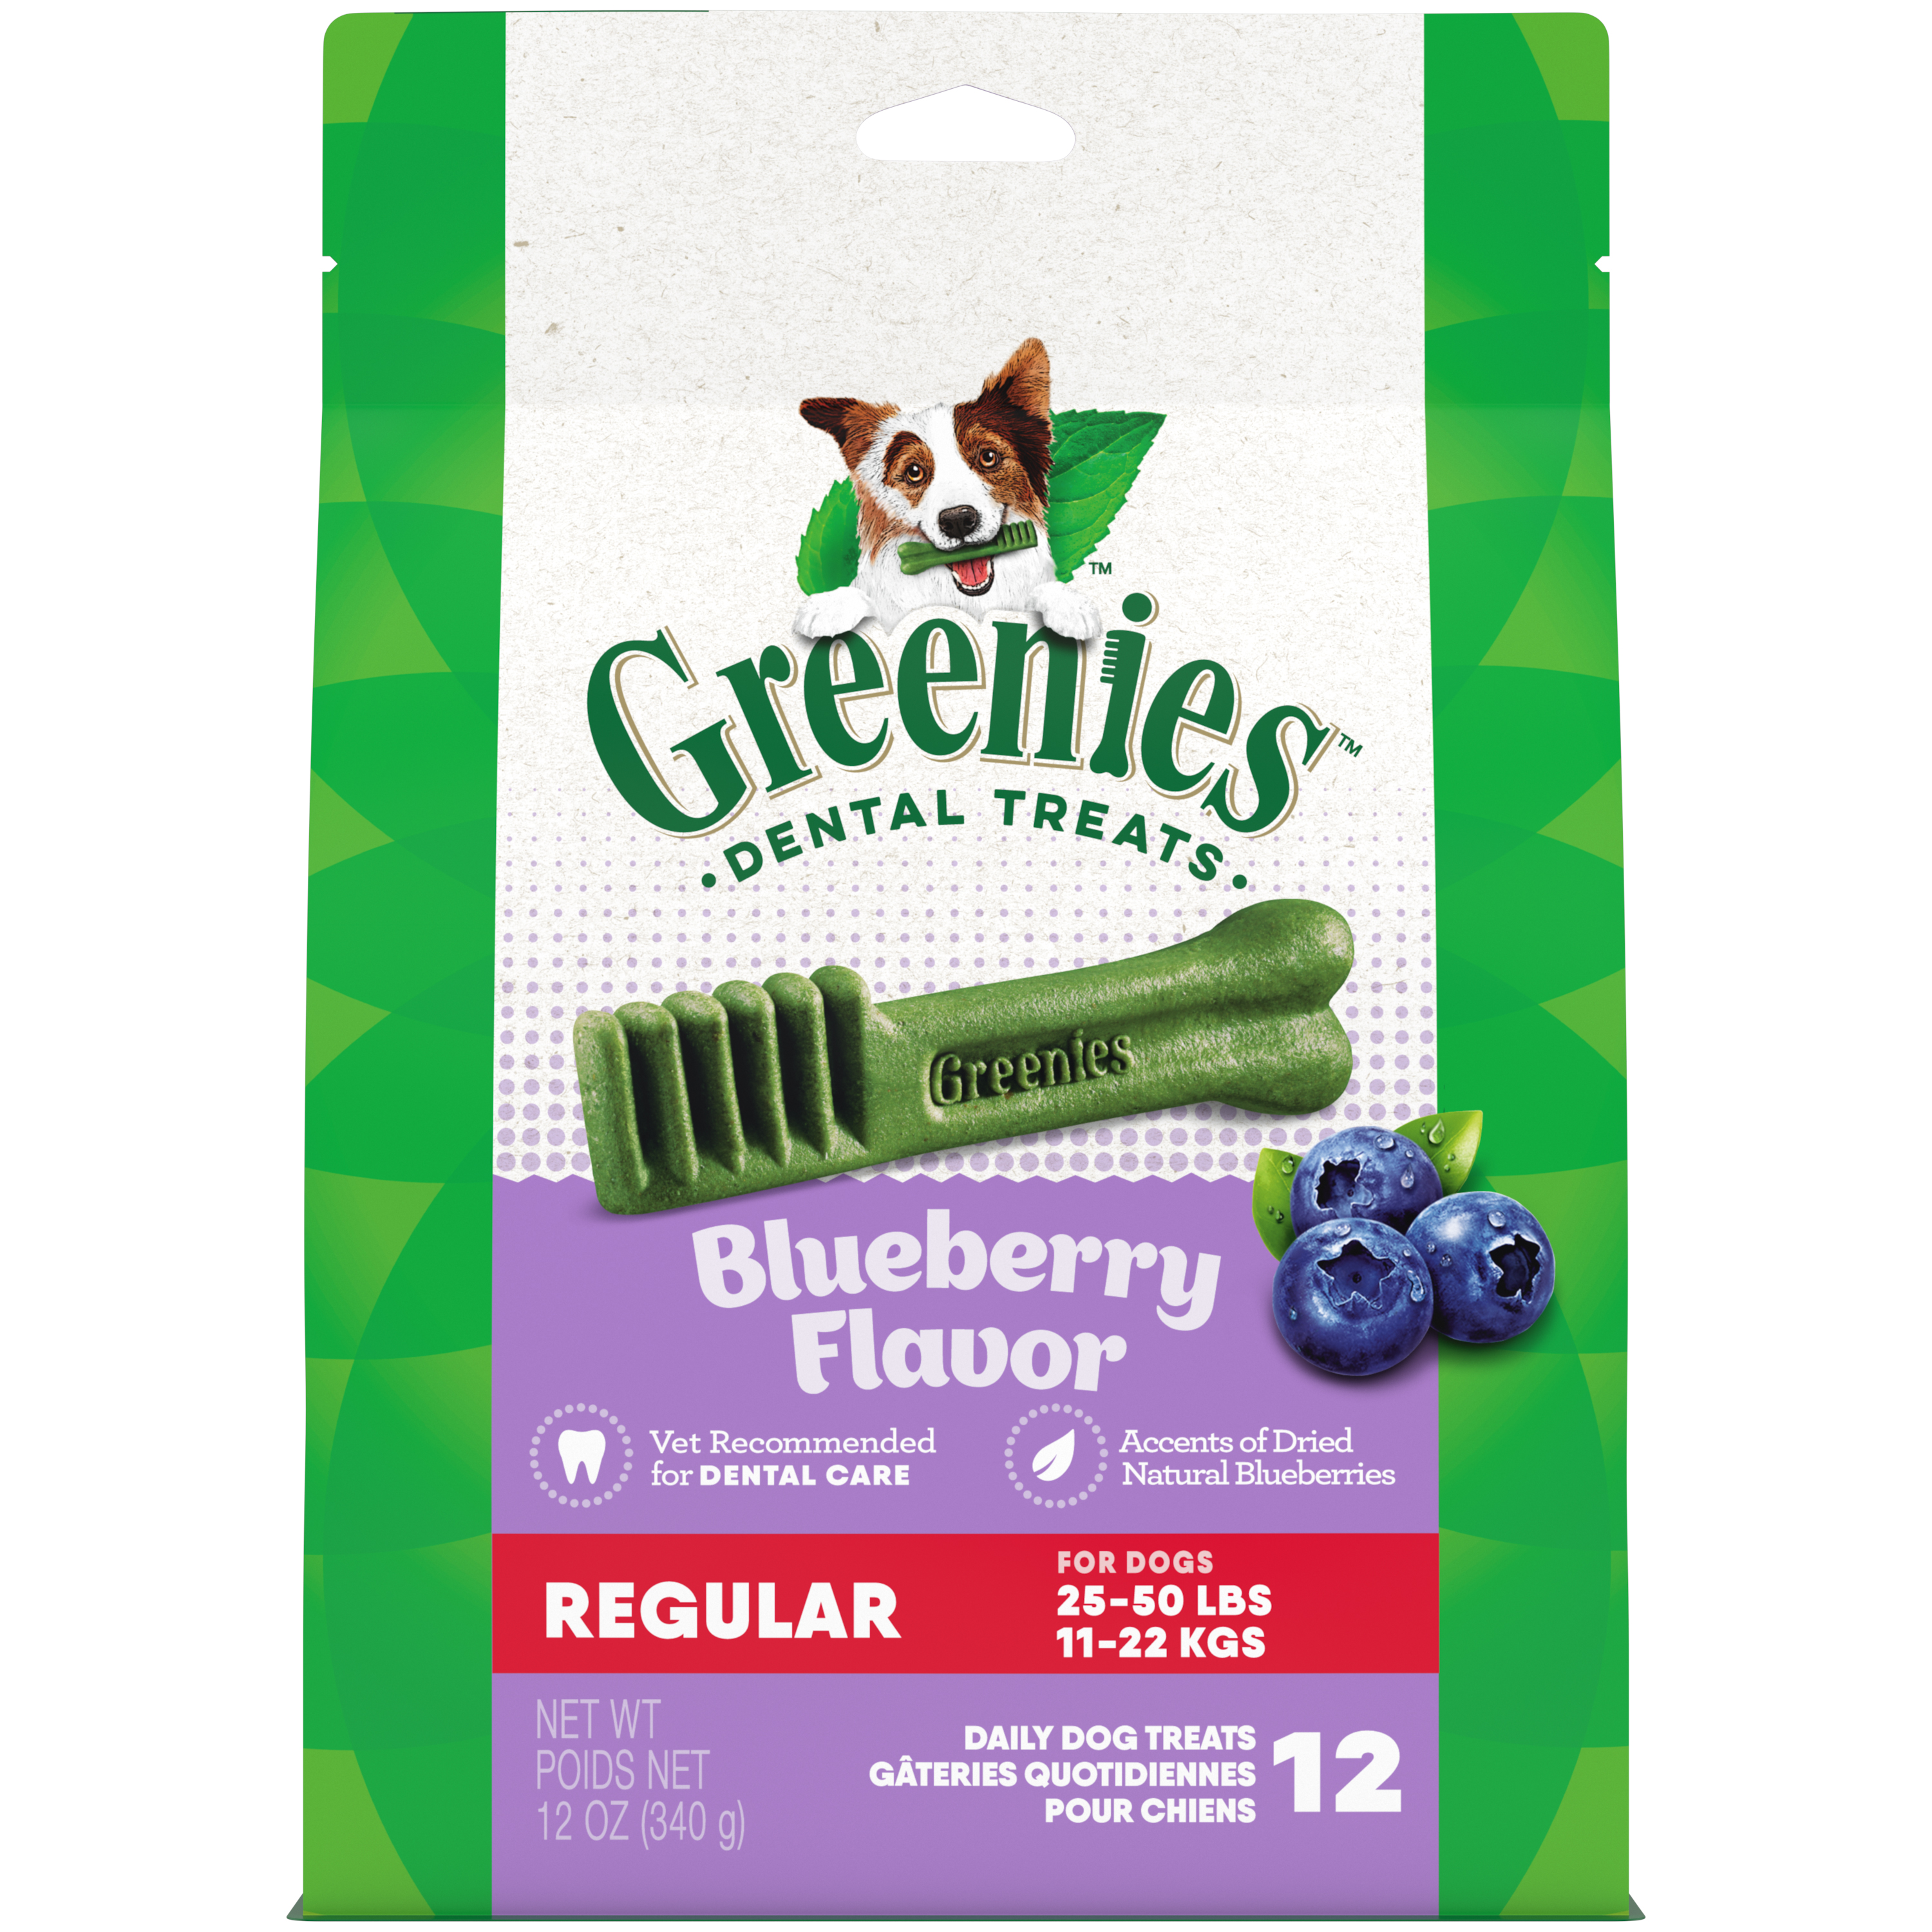 12 oz. Greenies Regular Blueberry Treat Pack - Health/First Aid